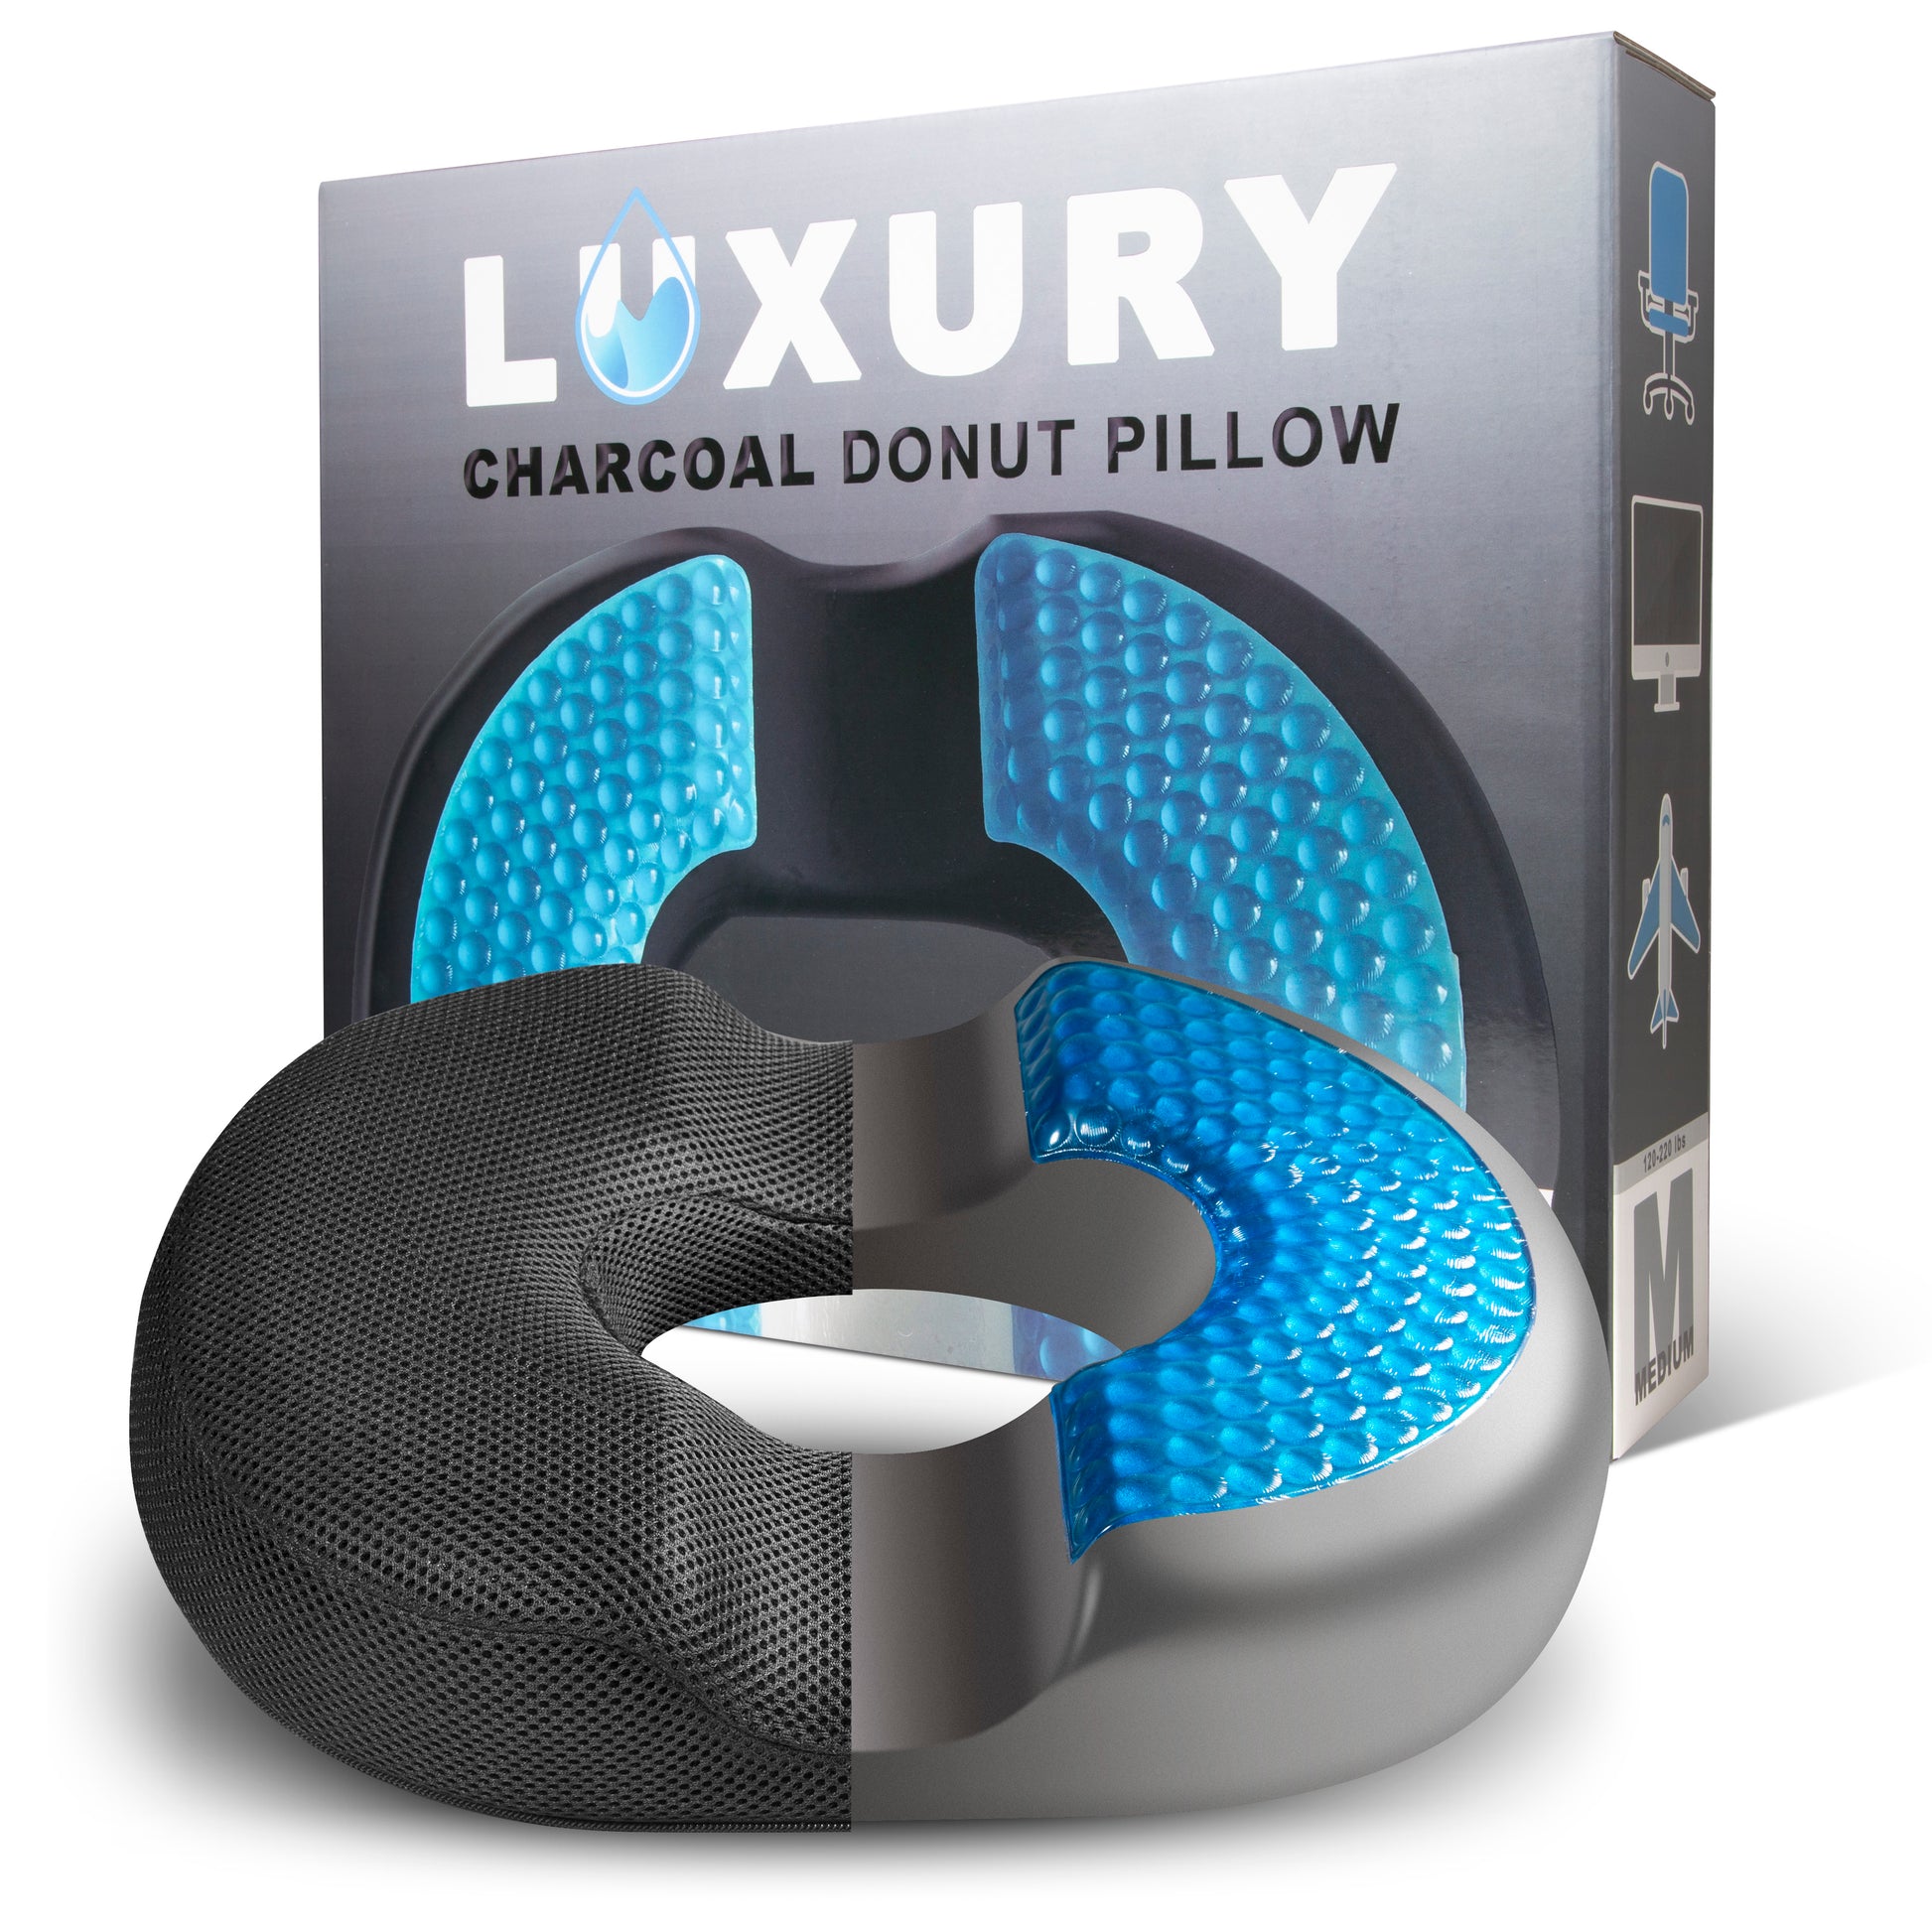 Donut Pillow for Tailbone Pain Cool Gel Hemorrhoid Pillow Donut